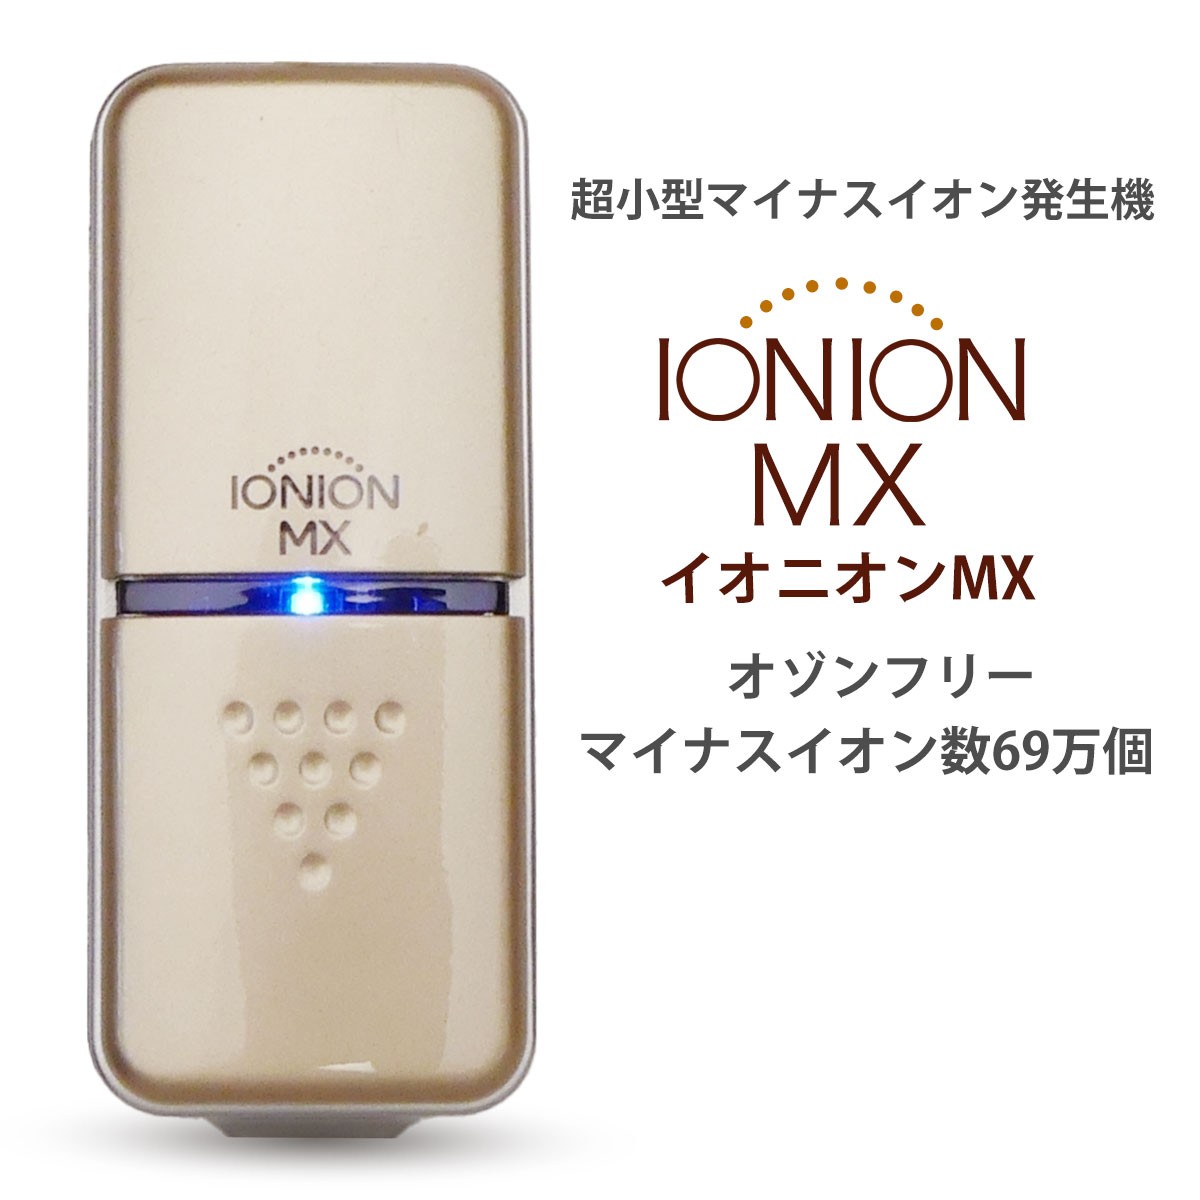 IONION MX イオニオンMX 超小型 マイナスイオン発生器 オゾンフリー マイナスイオン 69万個 ストラップ付き 日本製 敬老の日 プレゼント